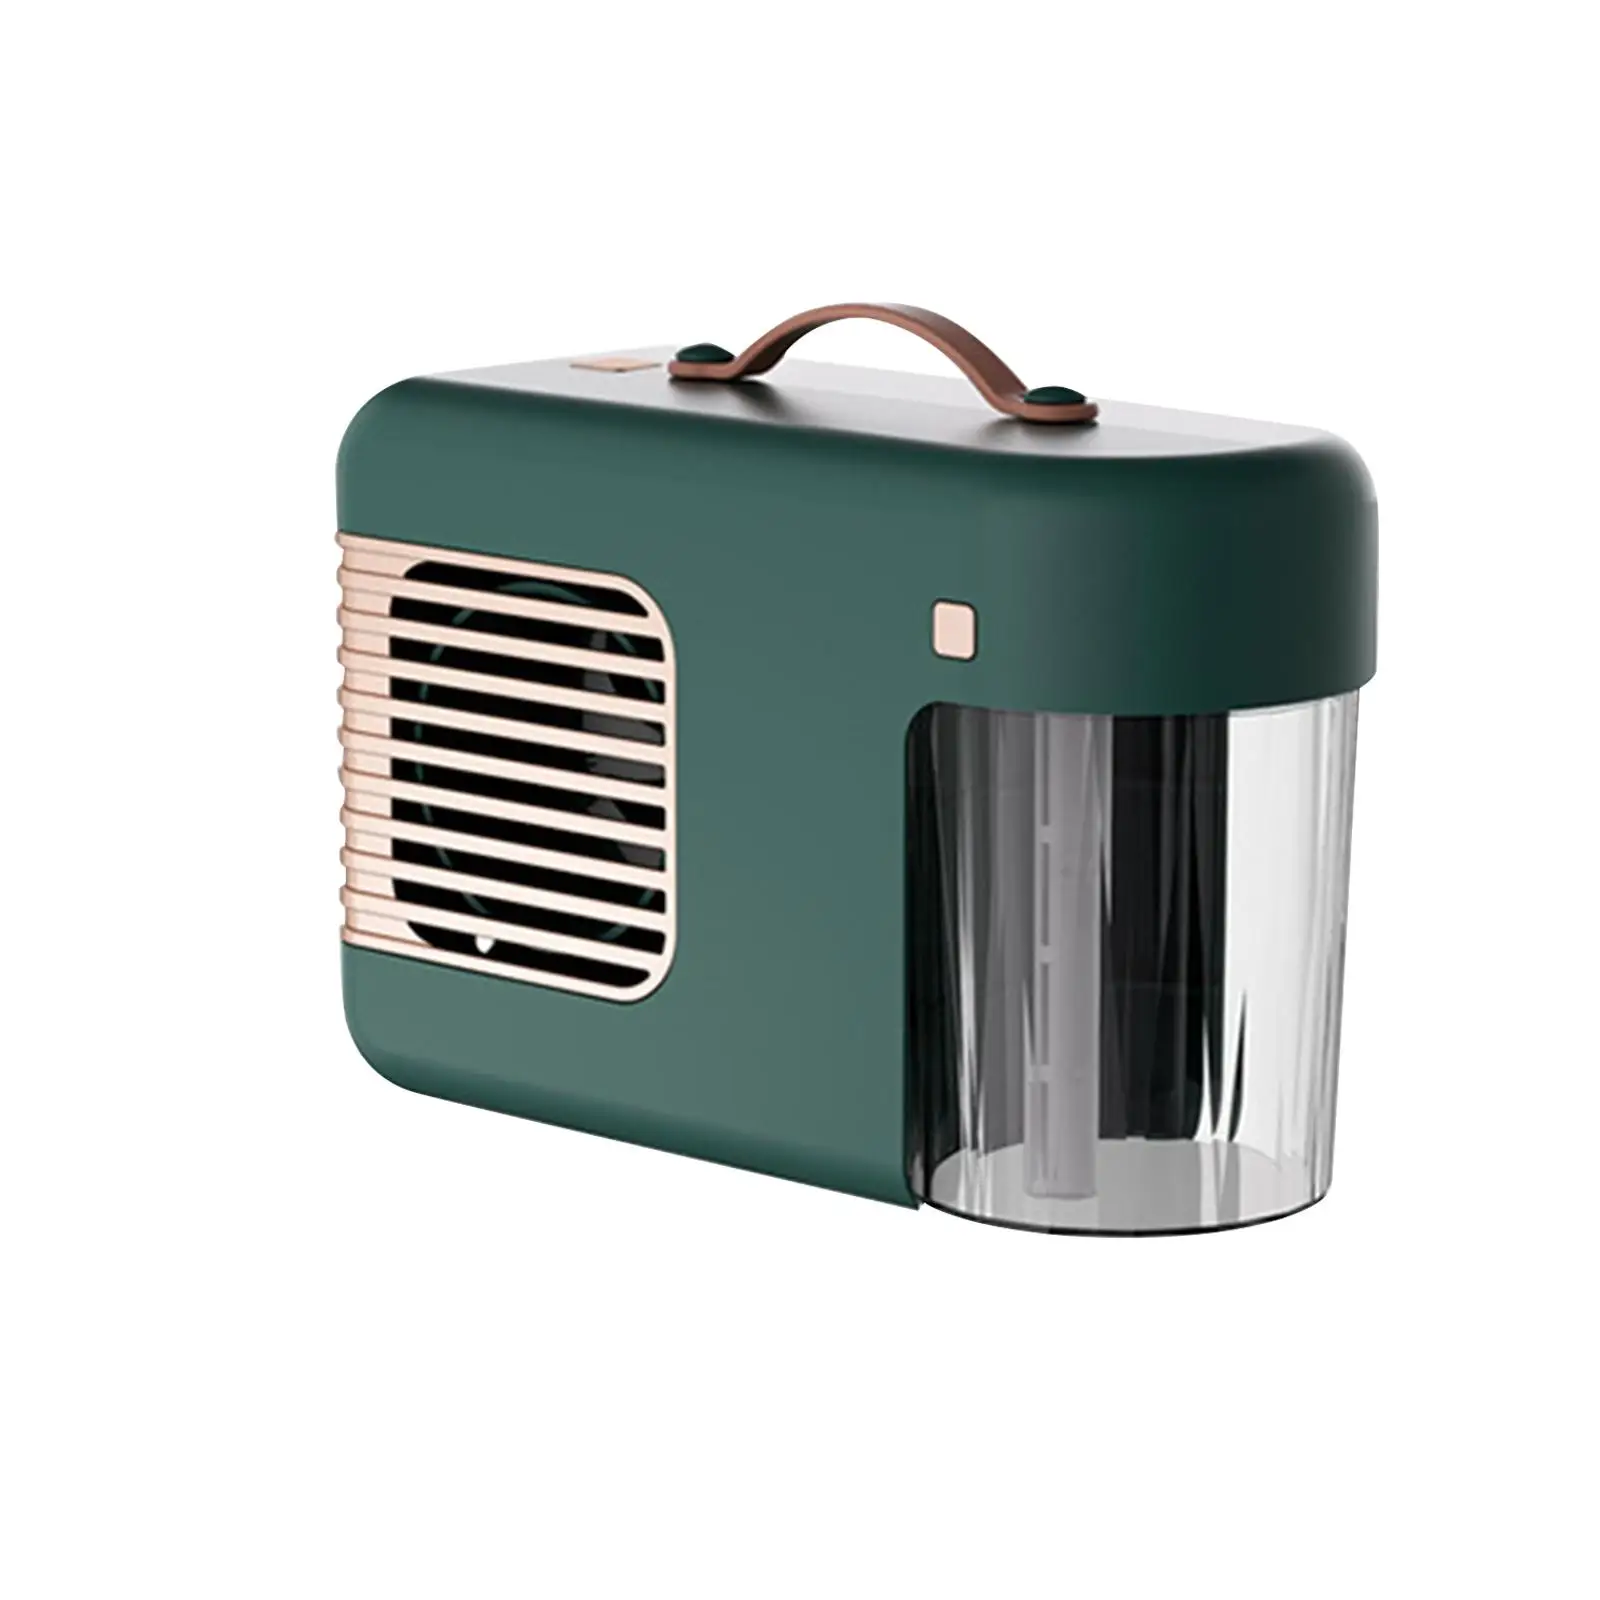 Portable Space Heater with Handle Desktop Fan Heater Table Warmer Humidifier for Bathroom Desktop Bedroom Office Living Room